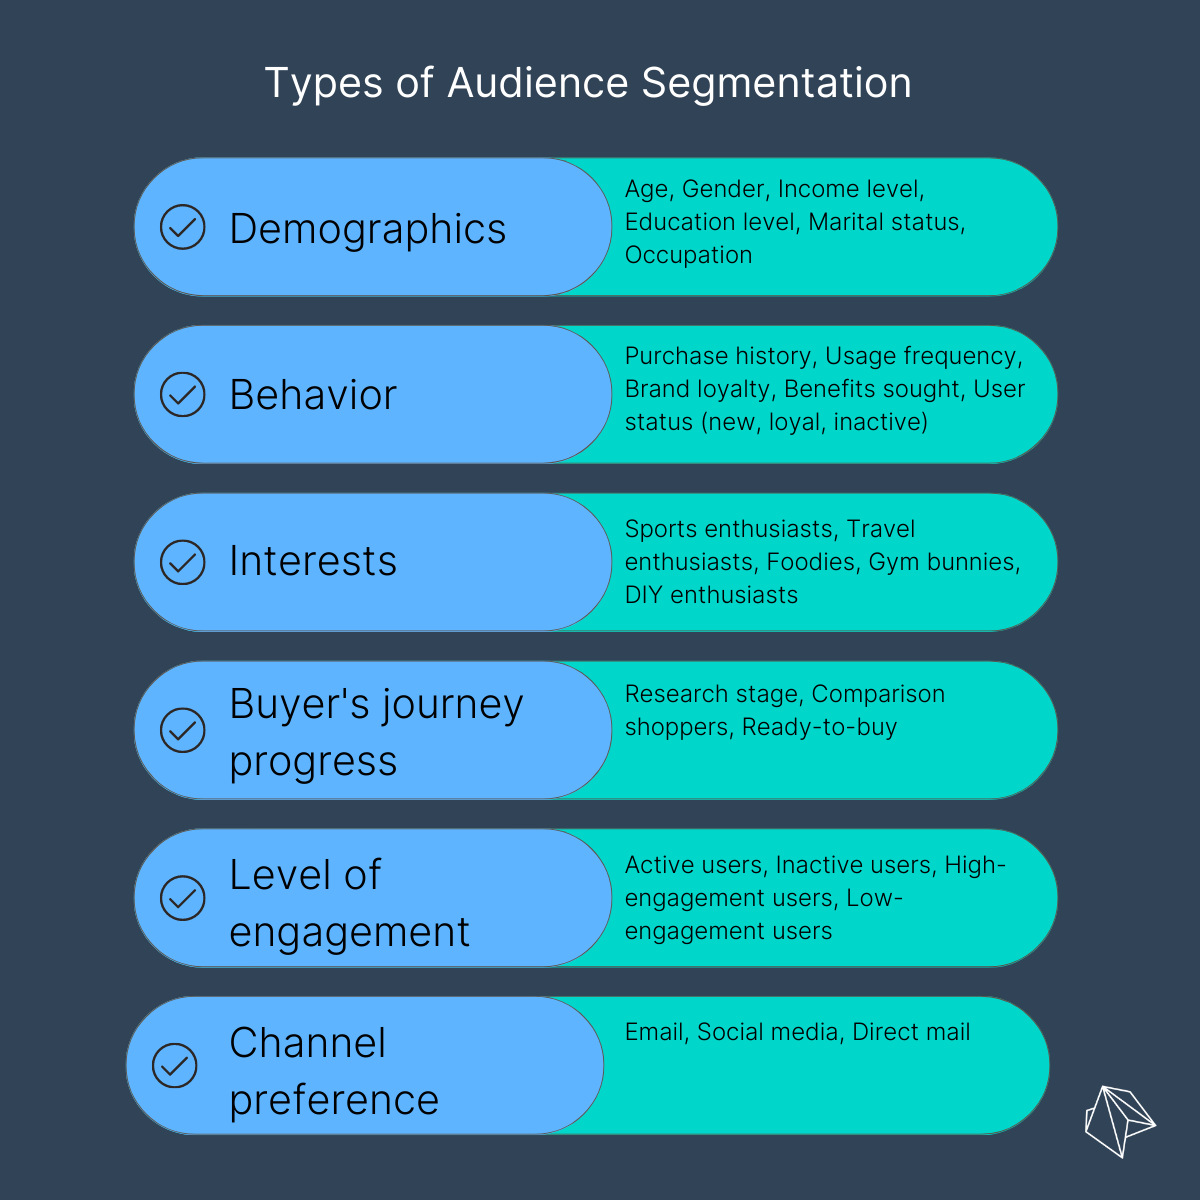 Types of audience segmentation